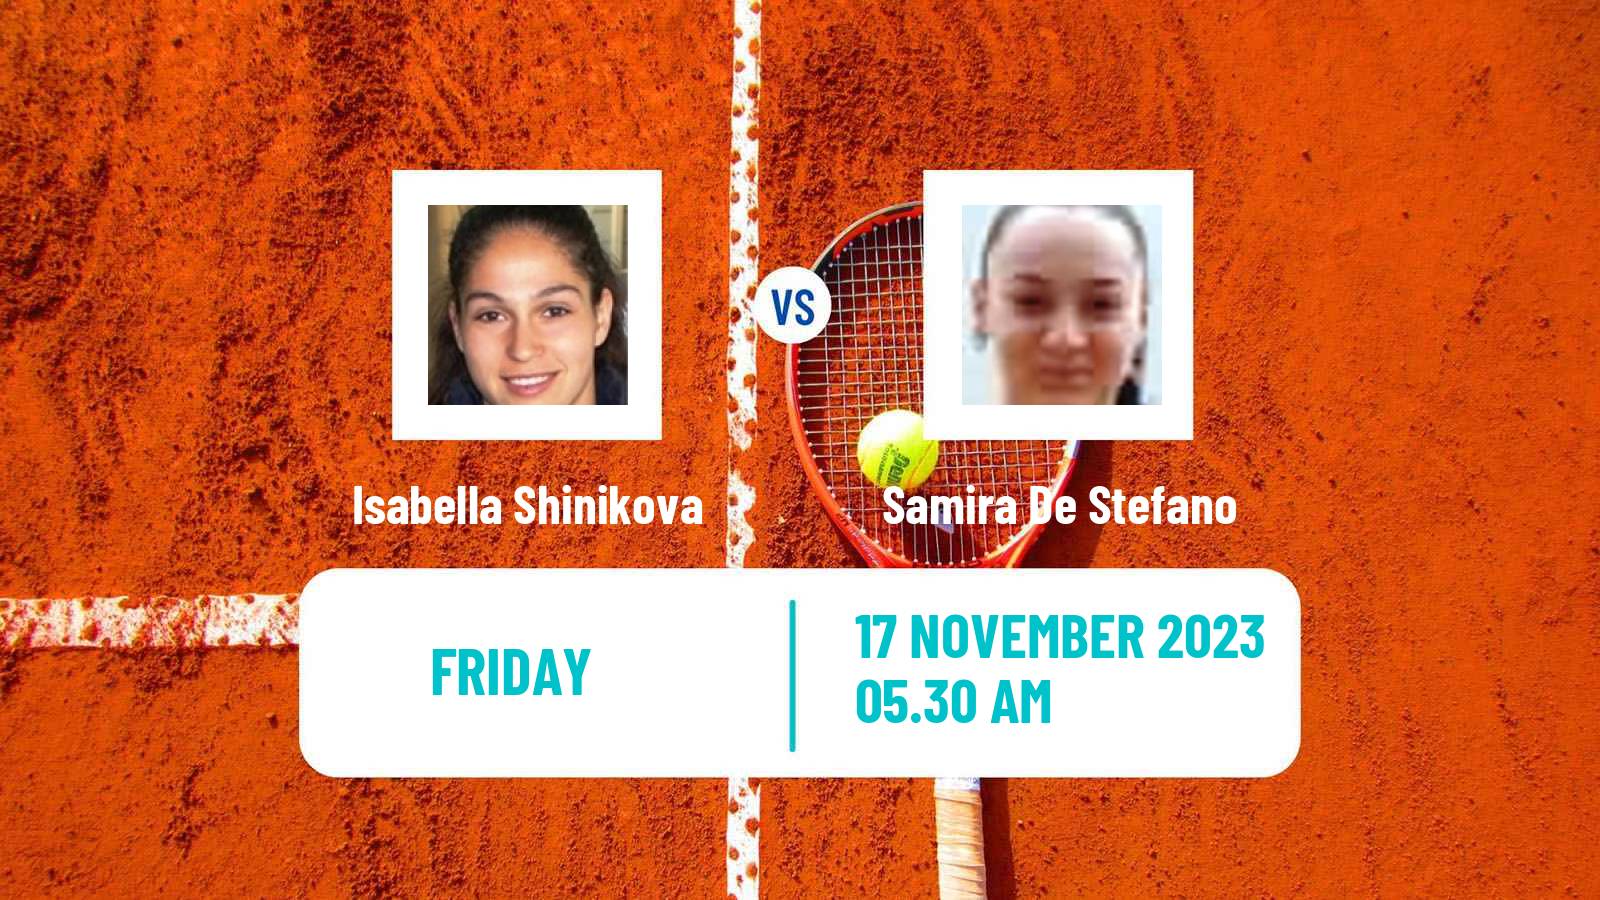 Tennis ITF W25 Solarino 3 Women Isabella Shinikova - Samira De Stefano